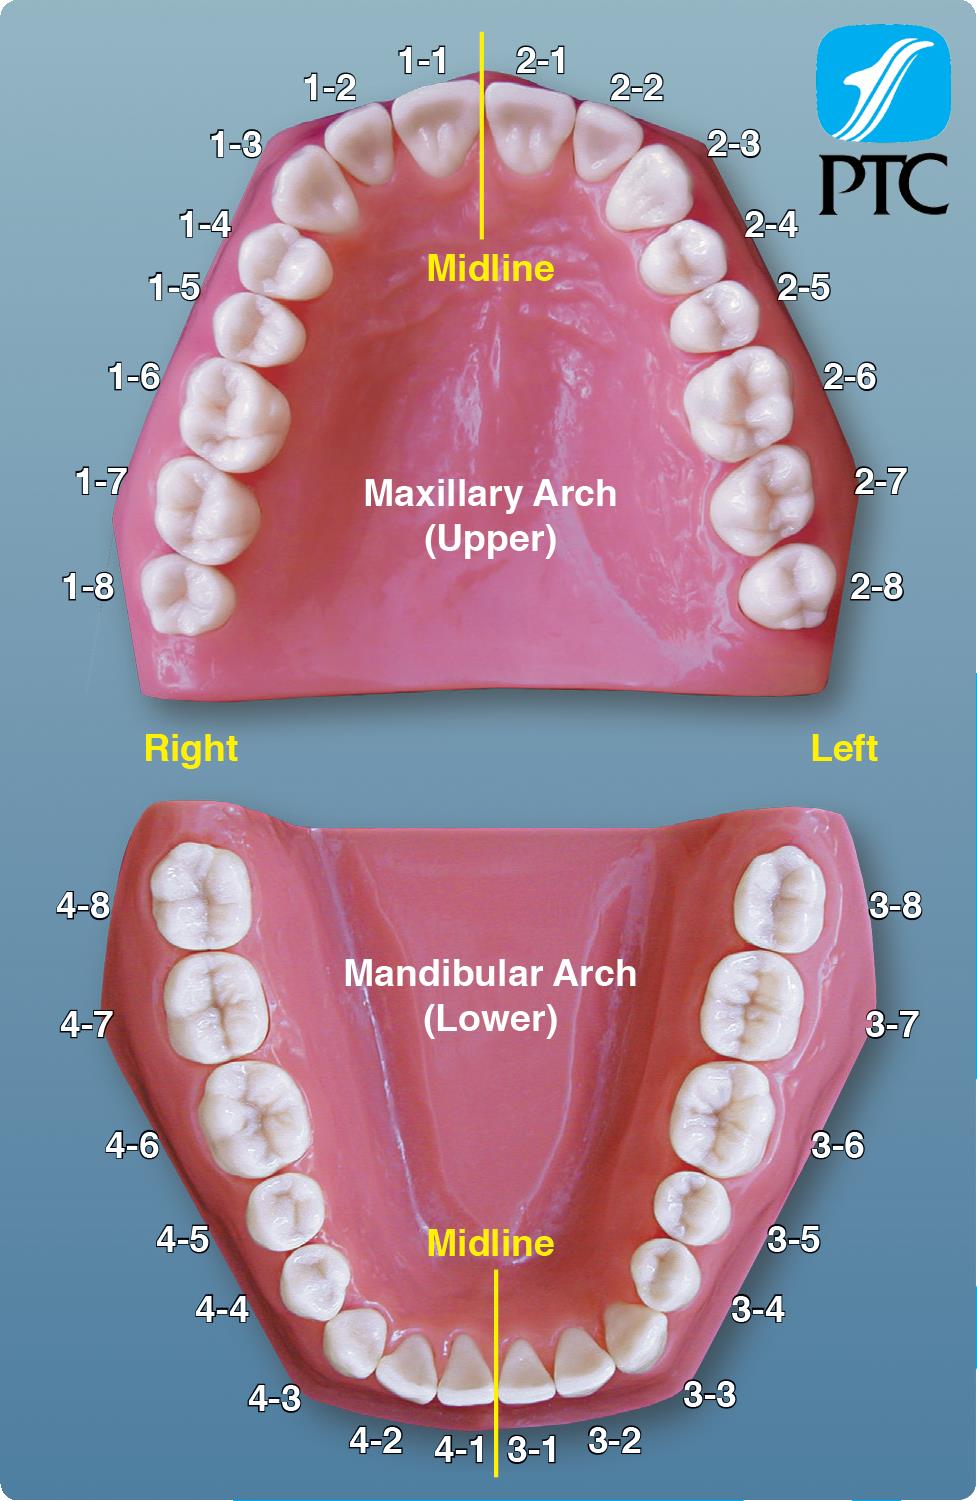 Primary Teeth Permanent Teeth Chart